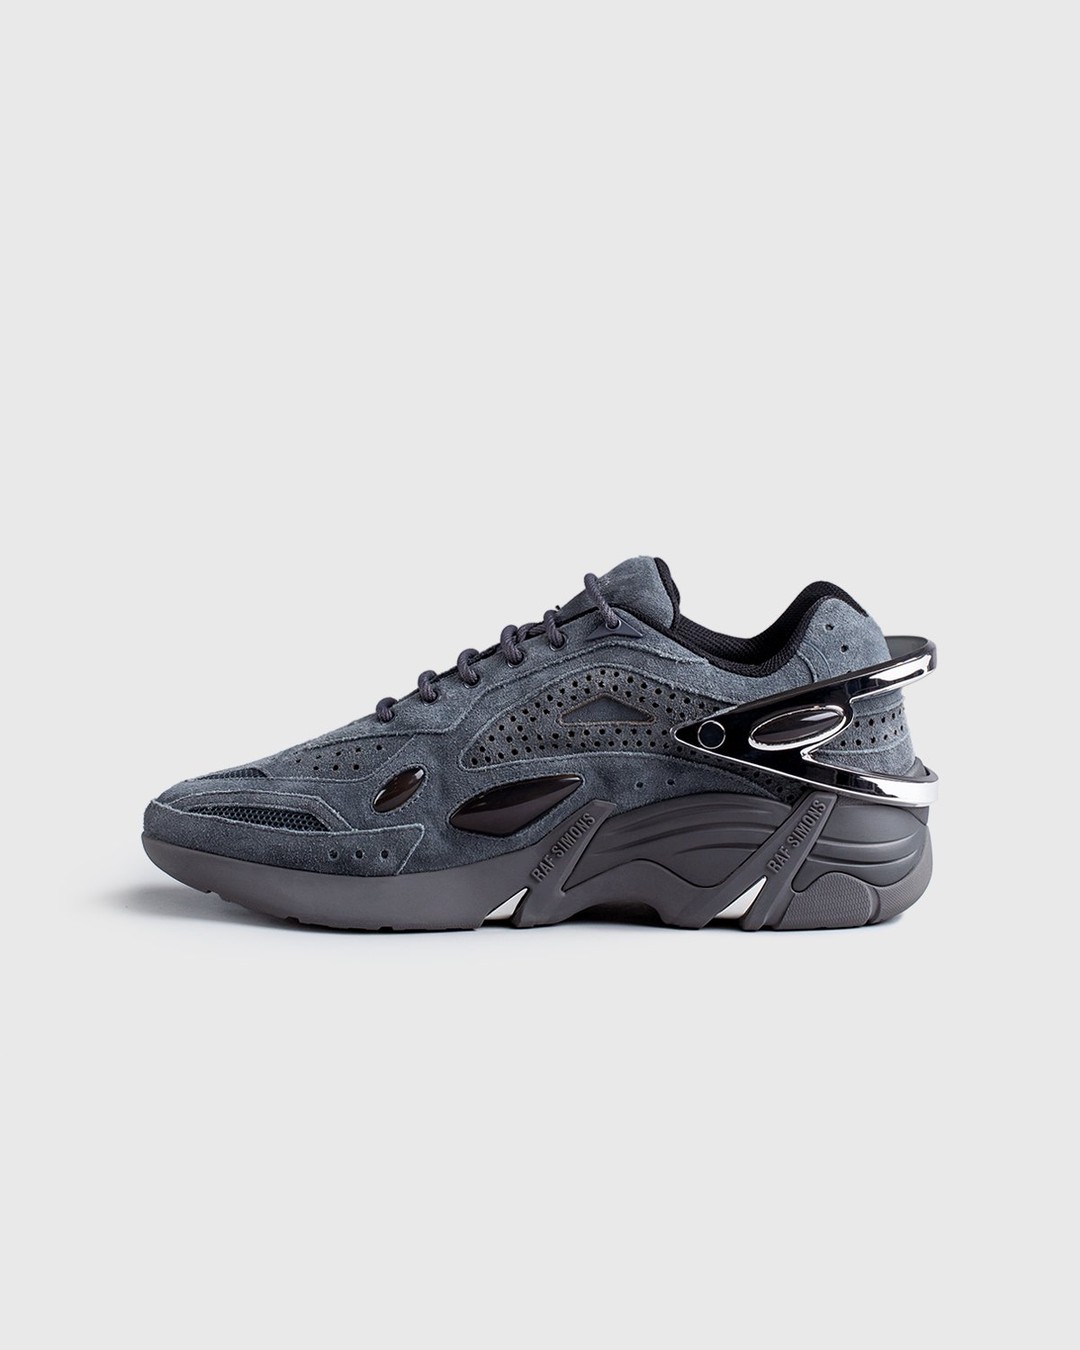 Raf Simons – Cylon Grey - Low Top Sneakers - Grey - Image 2